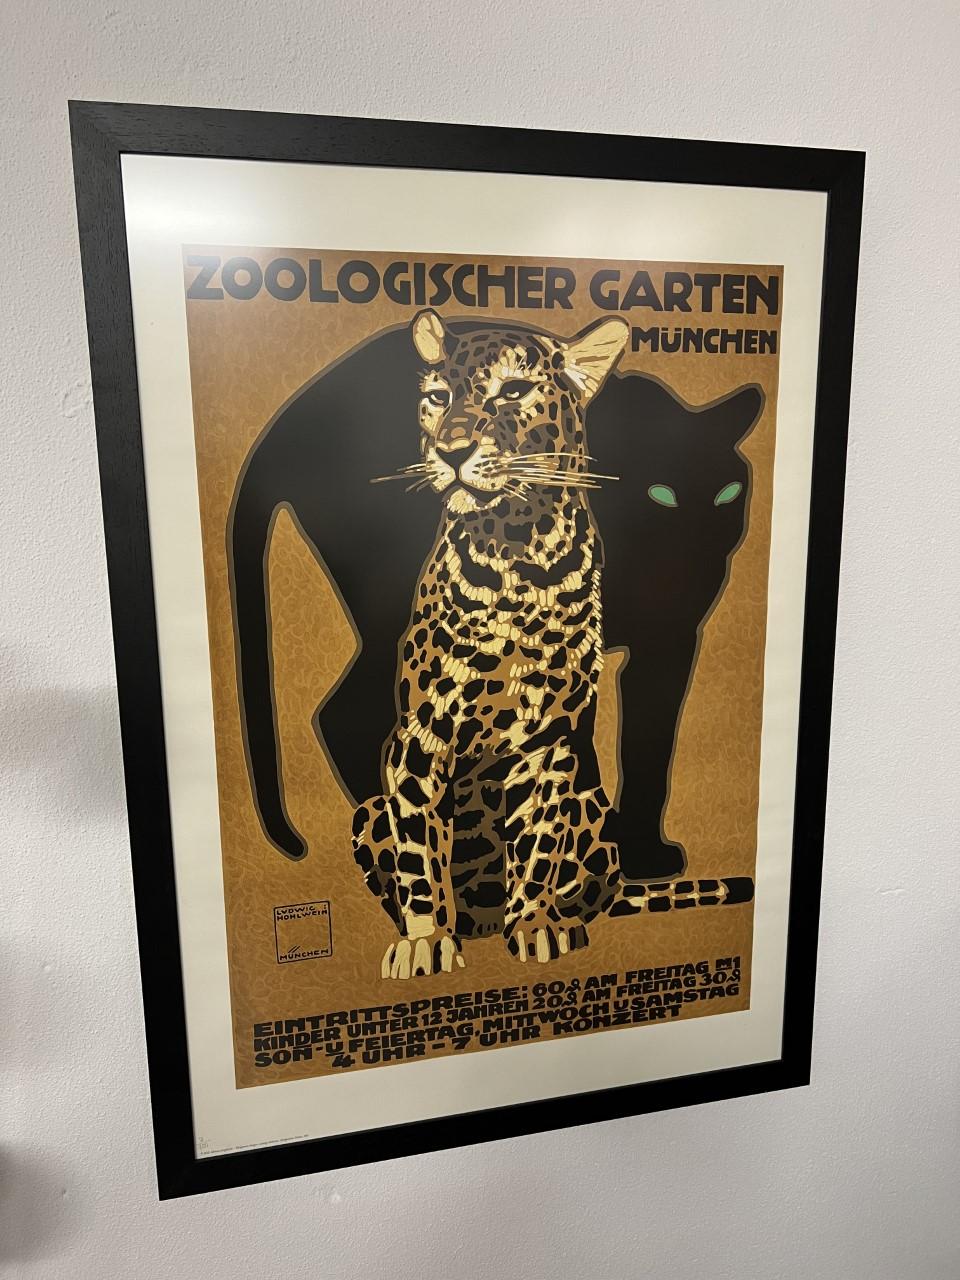 Contemporary Ludwig Hohlwein Zoologischer Garten Munchen Vintage Poster Re-Edition For Sale